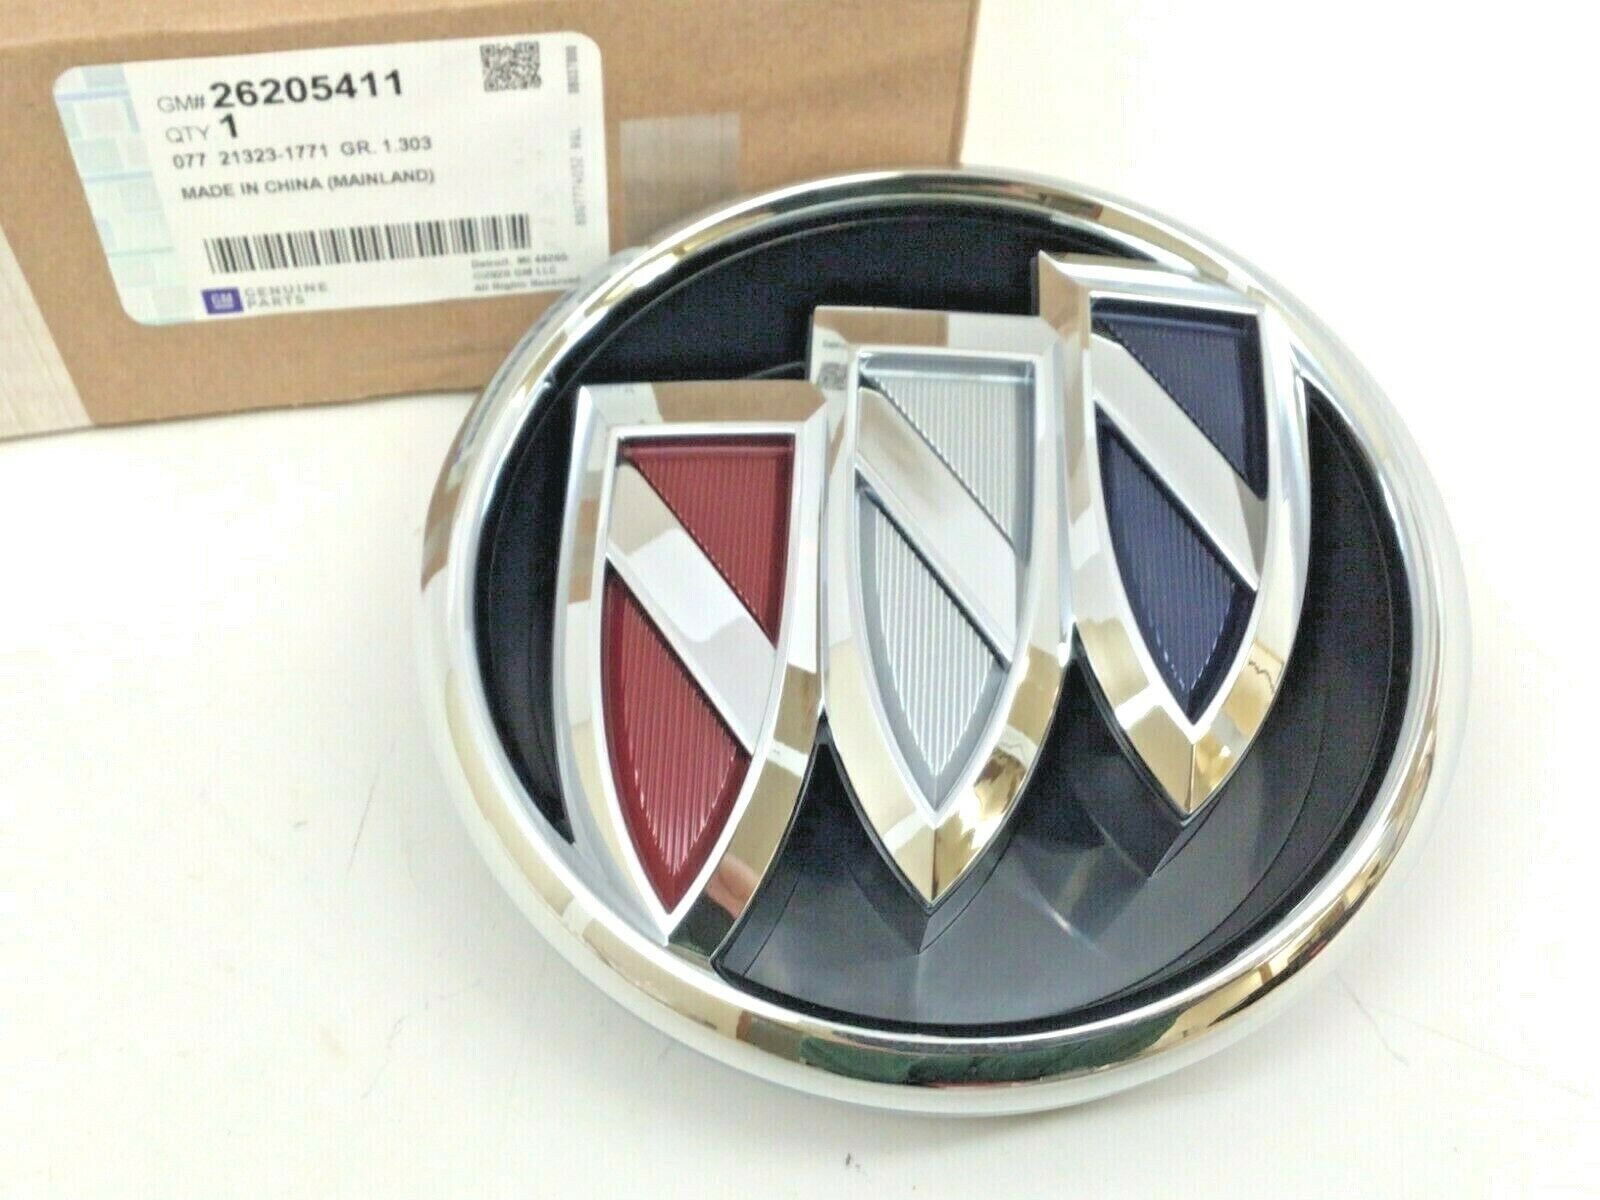 2014-2019 Buick Lacrosse Front Grille Tri-shield Emblem Badge new OEM 26205411